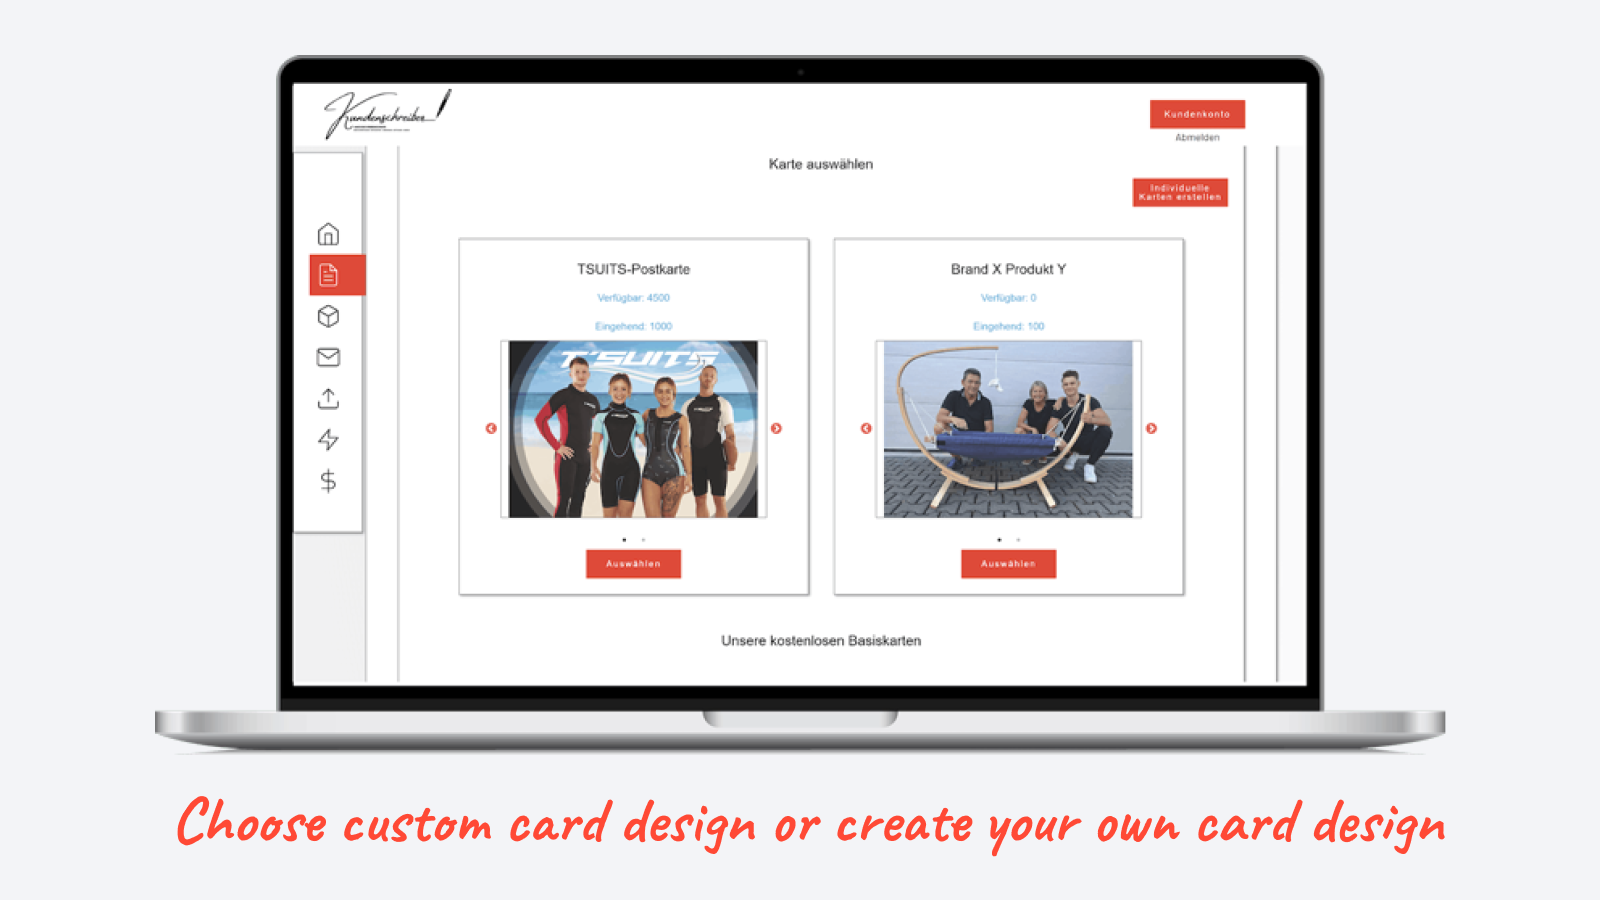 Choose custom card design or create your own card design